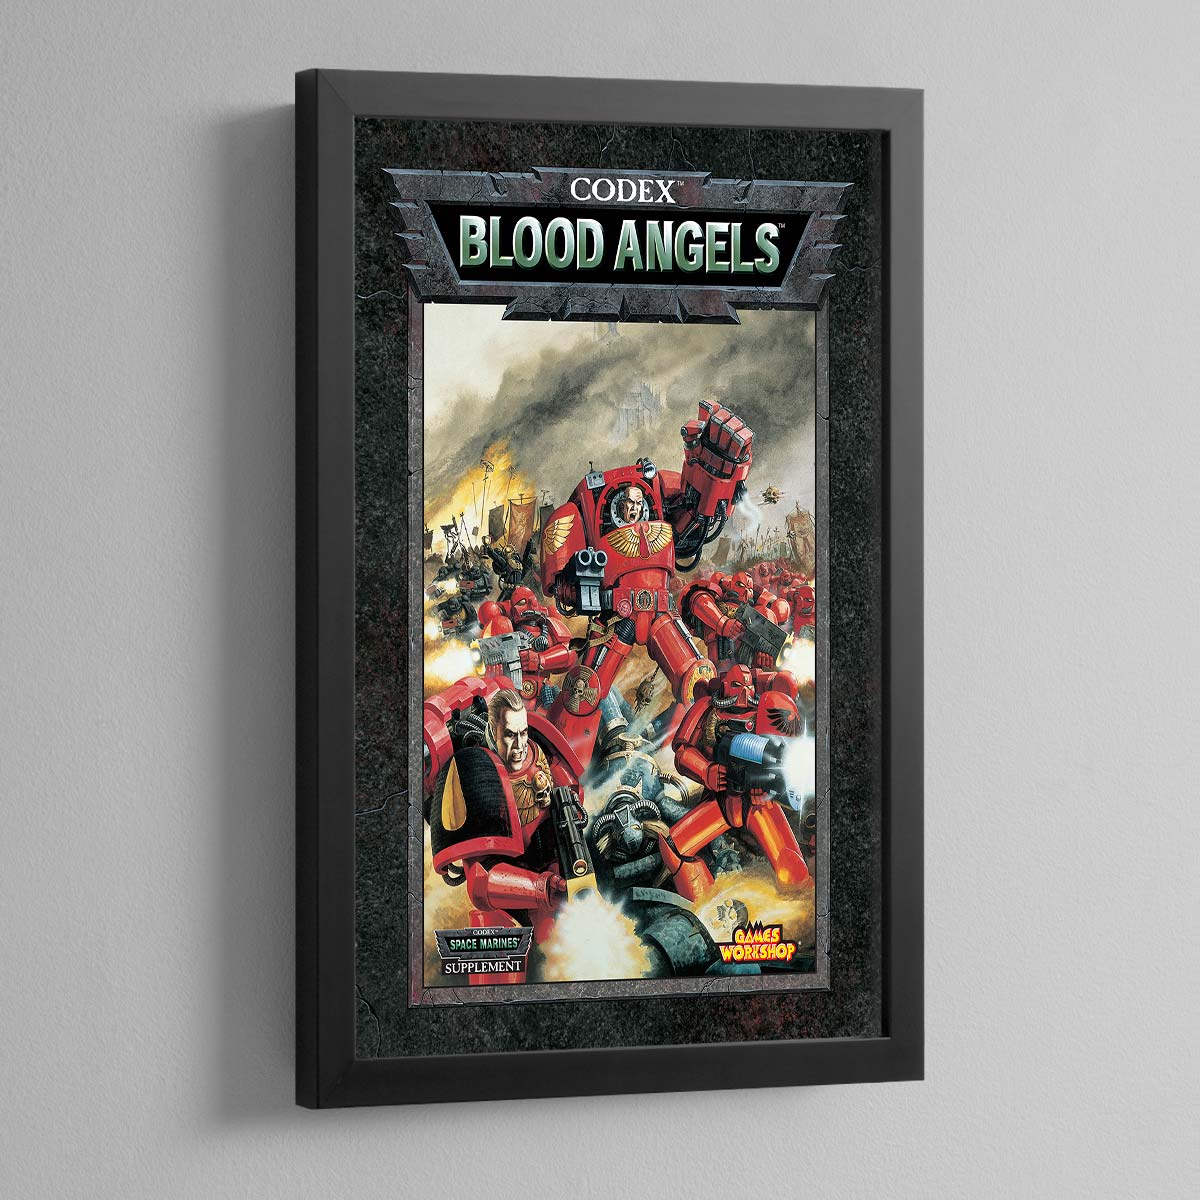 Warhammer 40,000 3rd Edition – Blood Angels – Frame